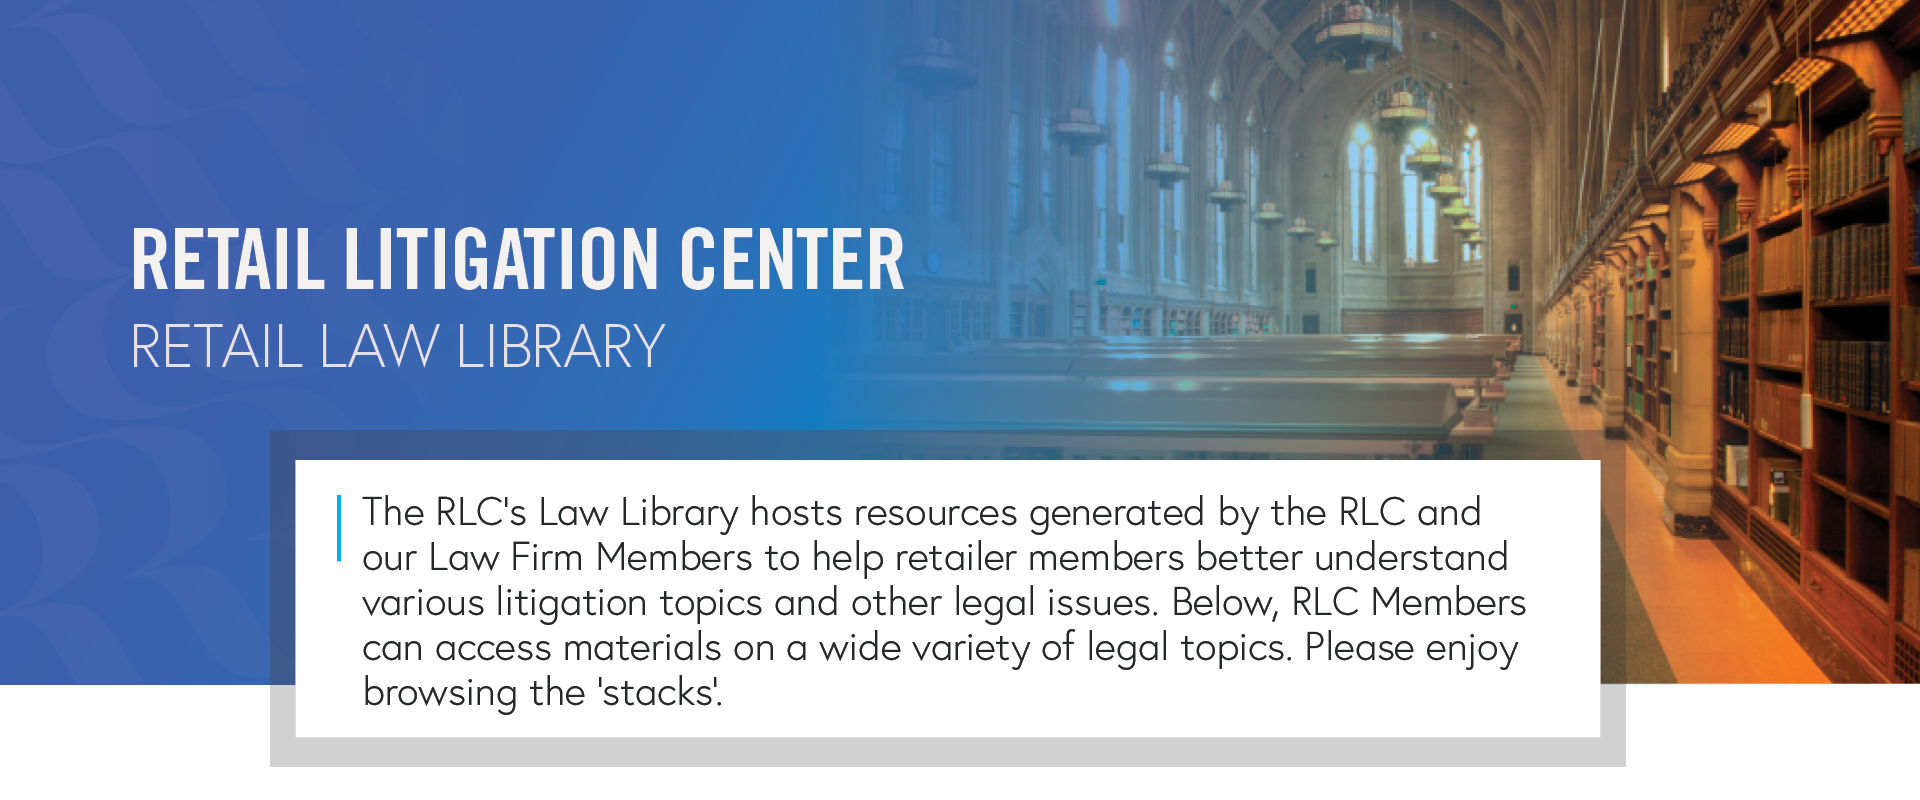 Retail Litigation Center - Retail Law Conference